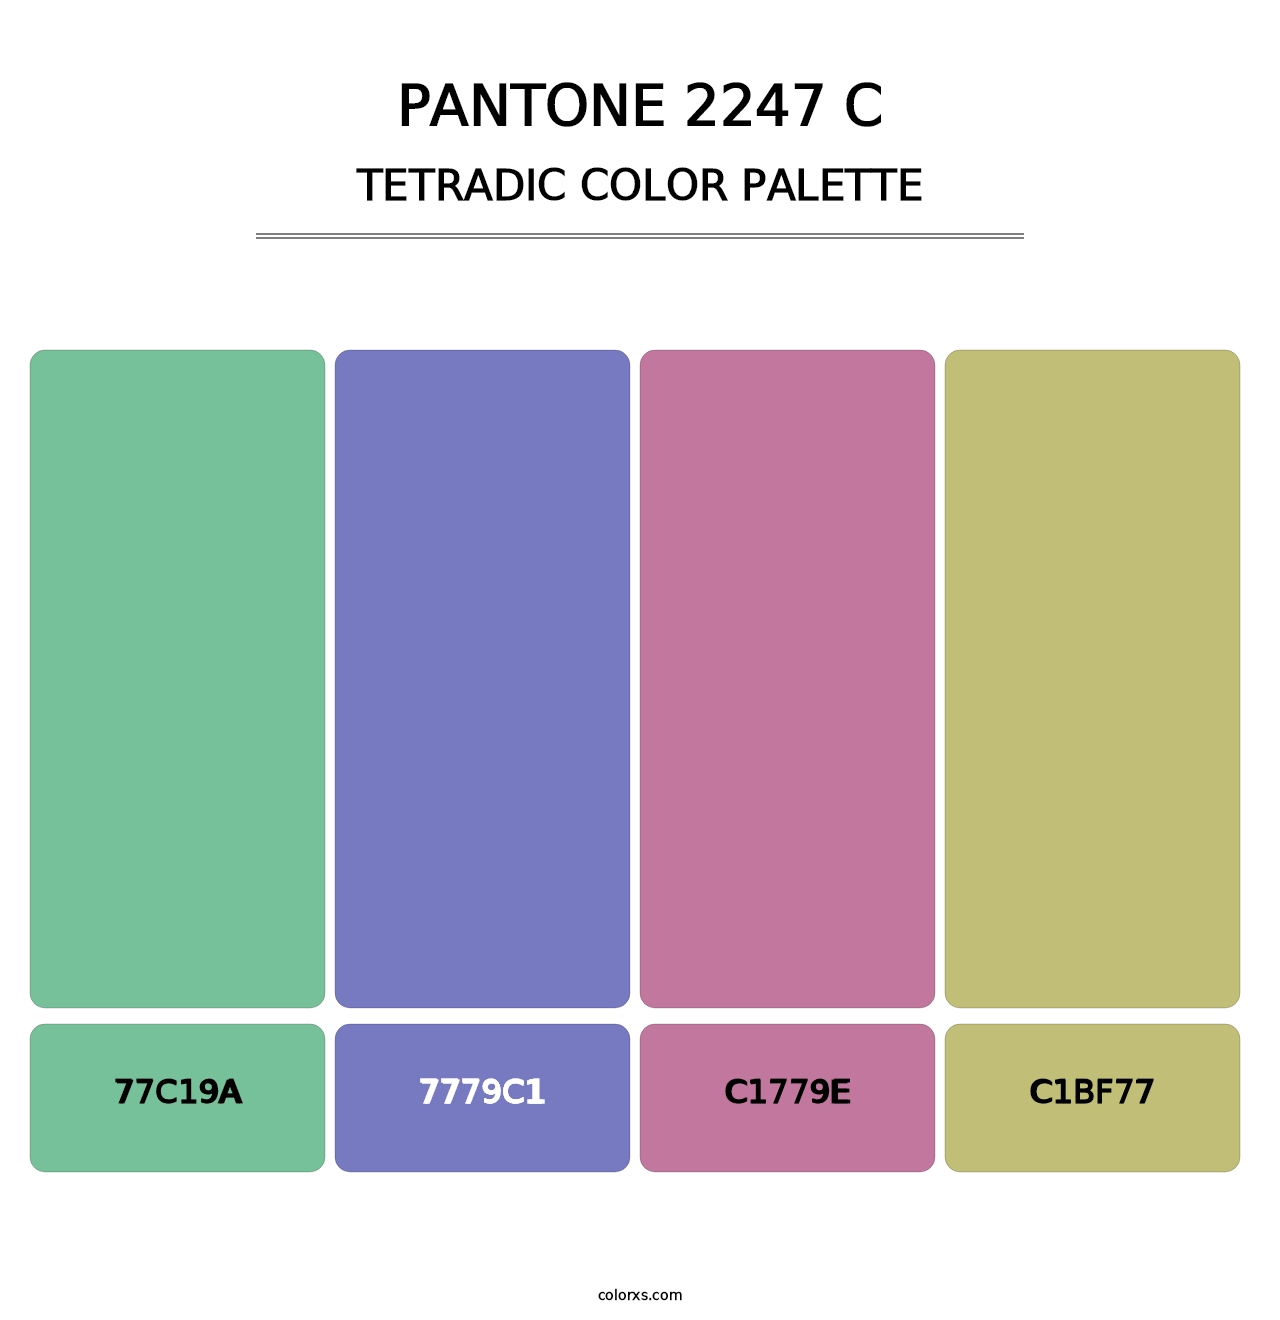 PANTONE 2247 C - Tetradic Color Palette